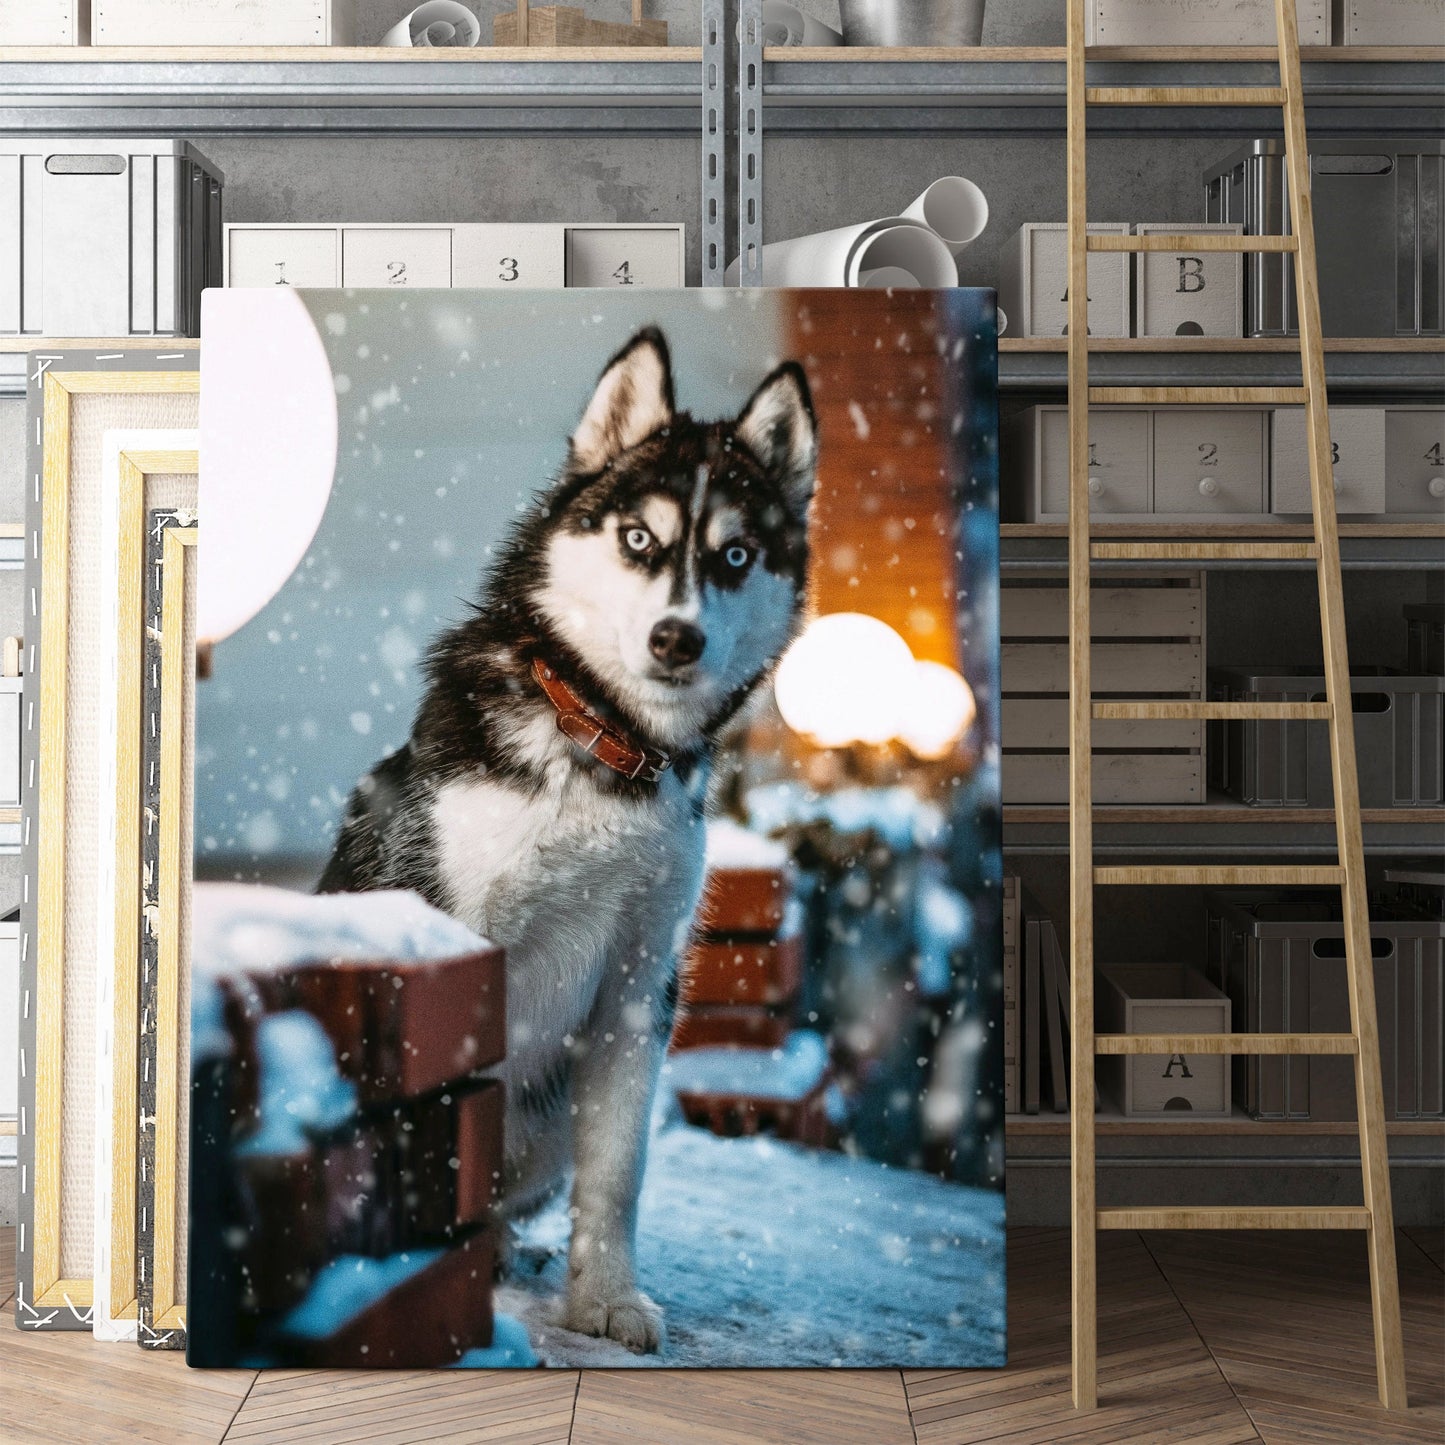 Dog photo print on canvas